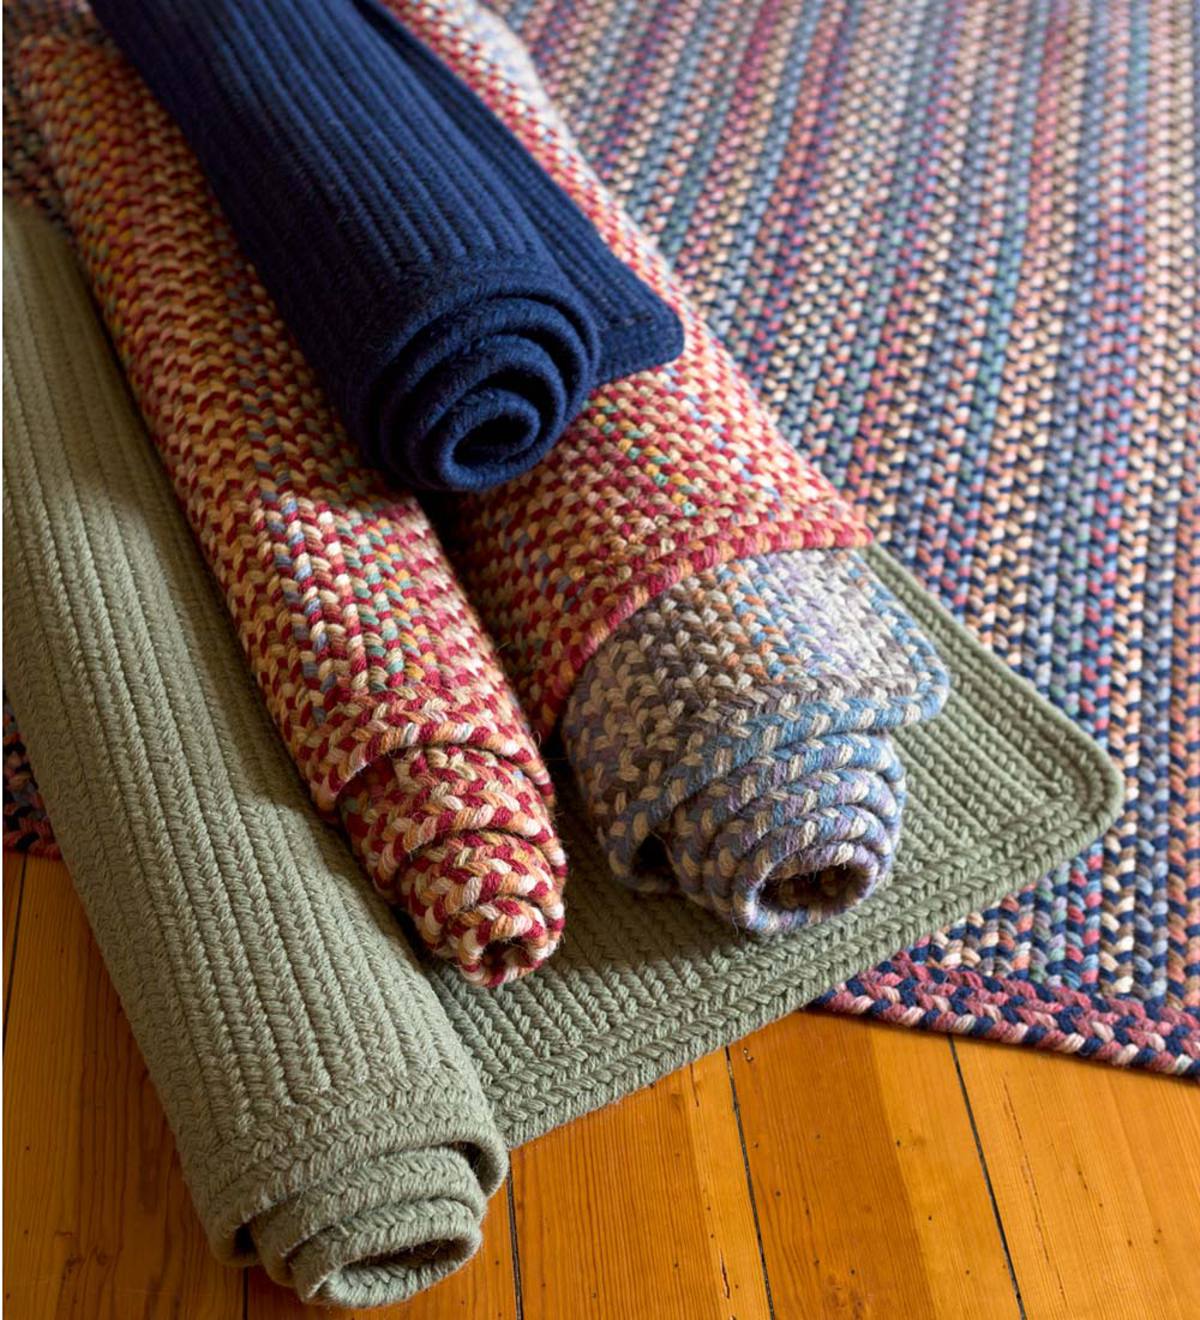 Blue Ridge Half Round Wool Braided Rug, 2' x 4' - Onyx Multi